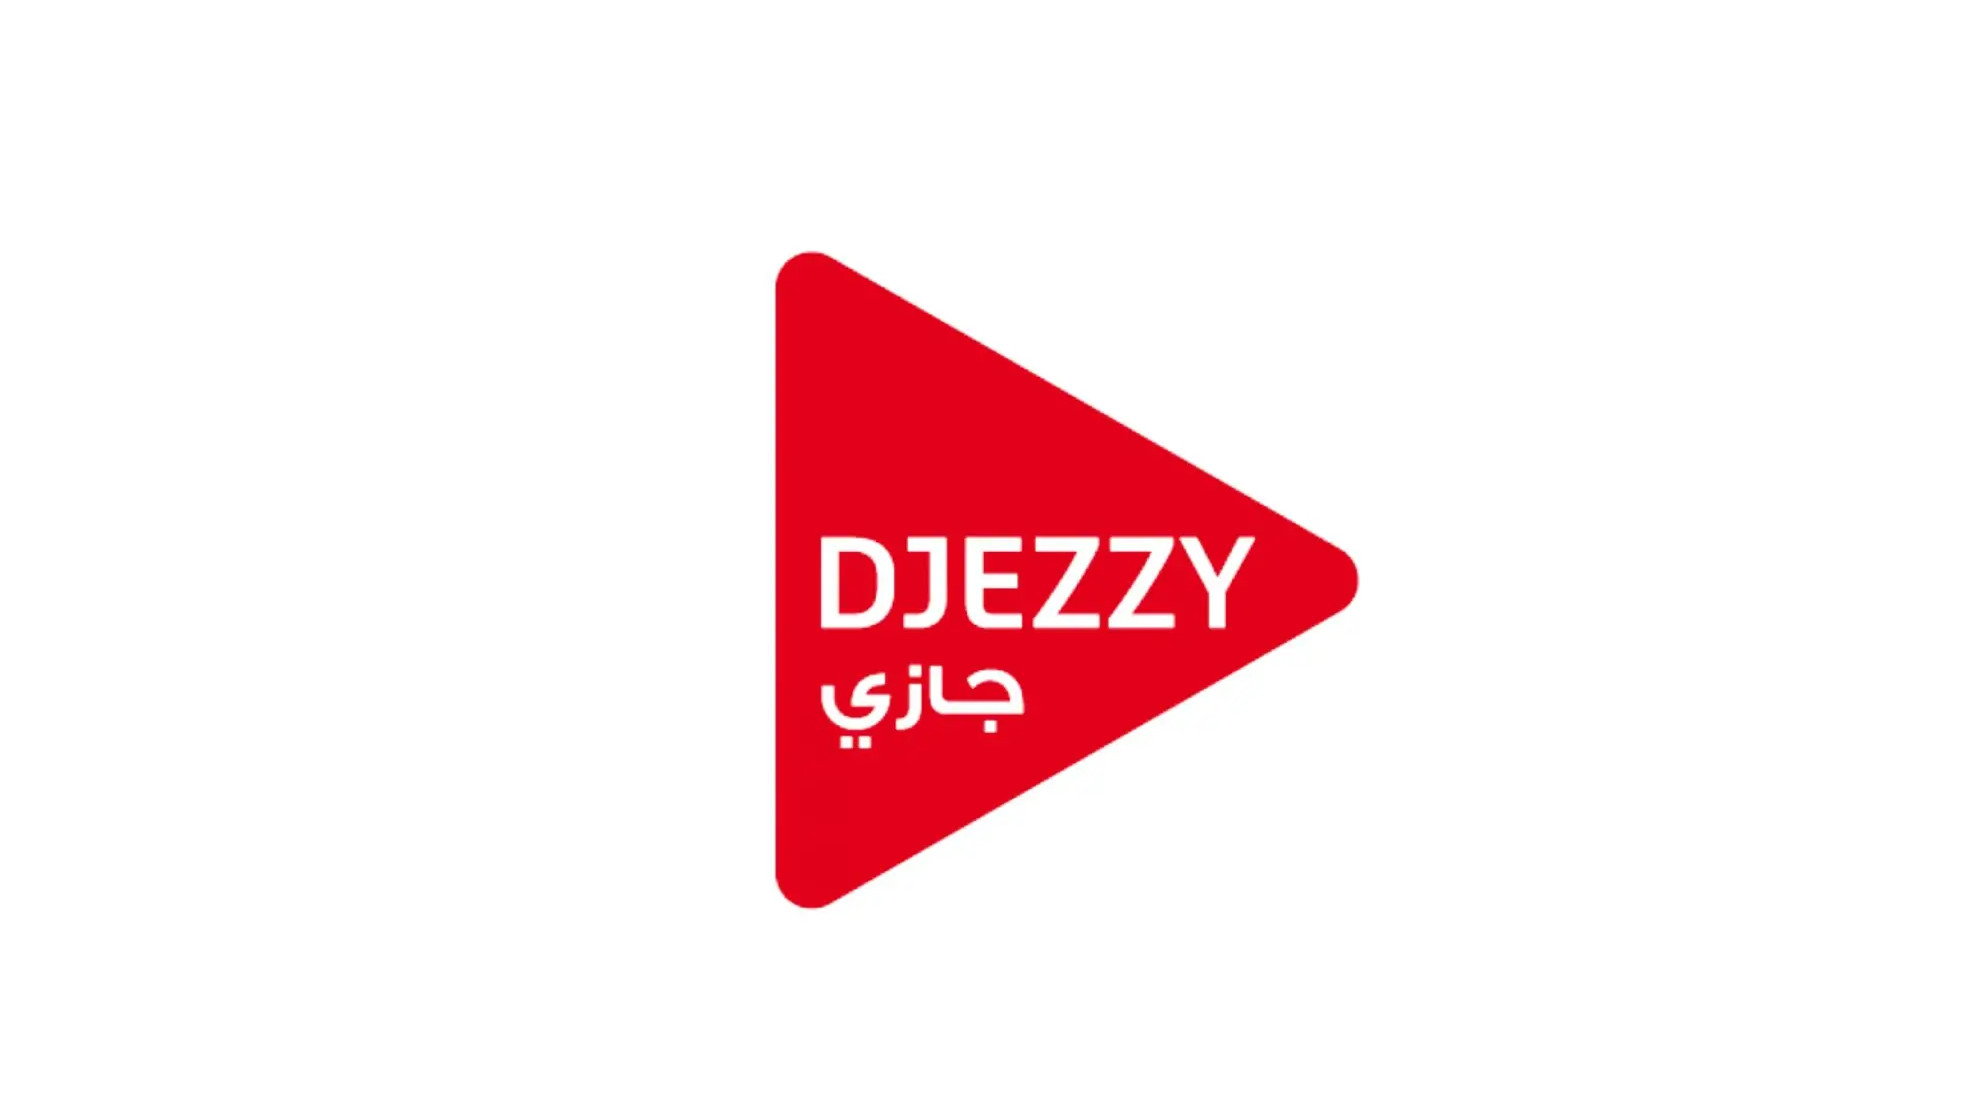 Djezzy 100 DZD Mobile Top-up DZ 1.36 $